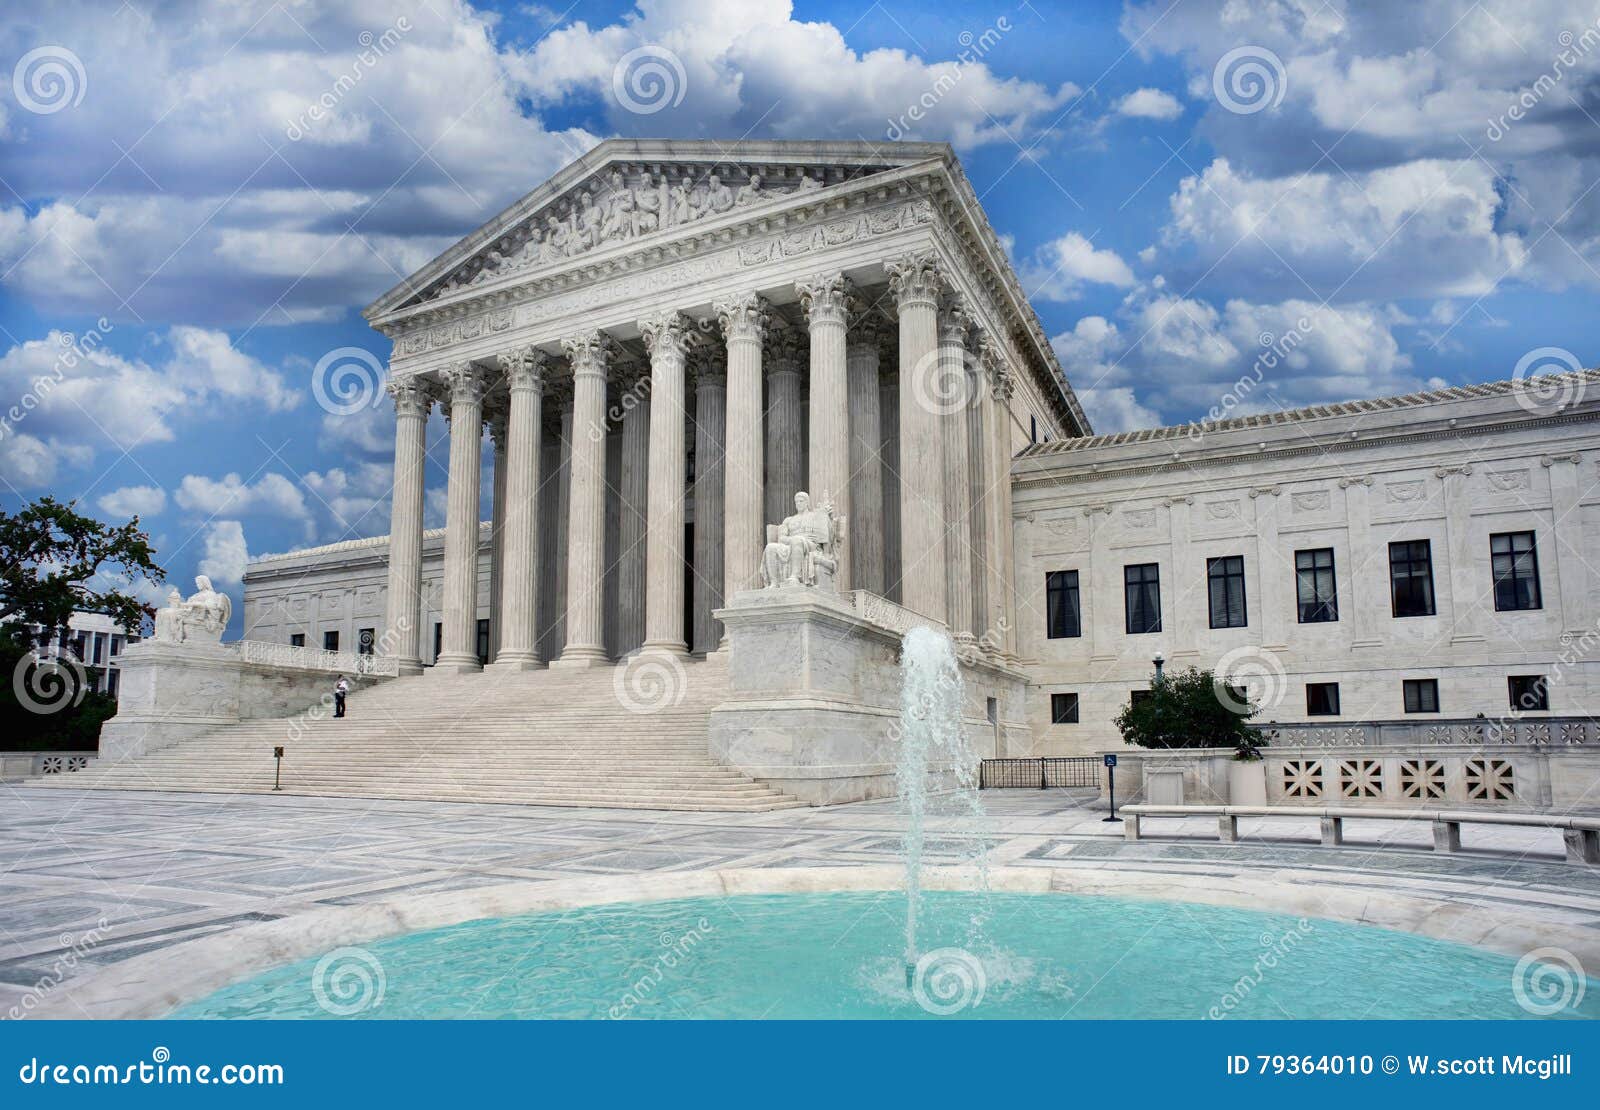 Washington Supreme Court building in Washington DC.